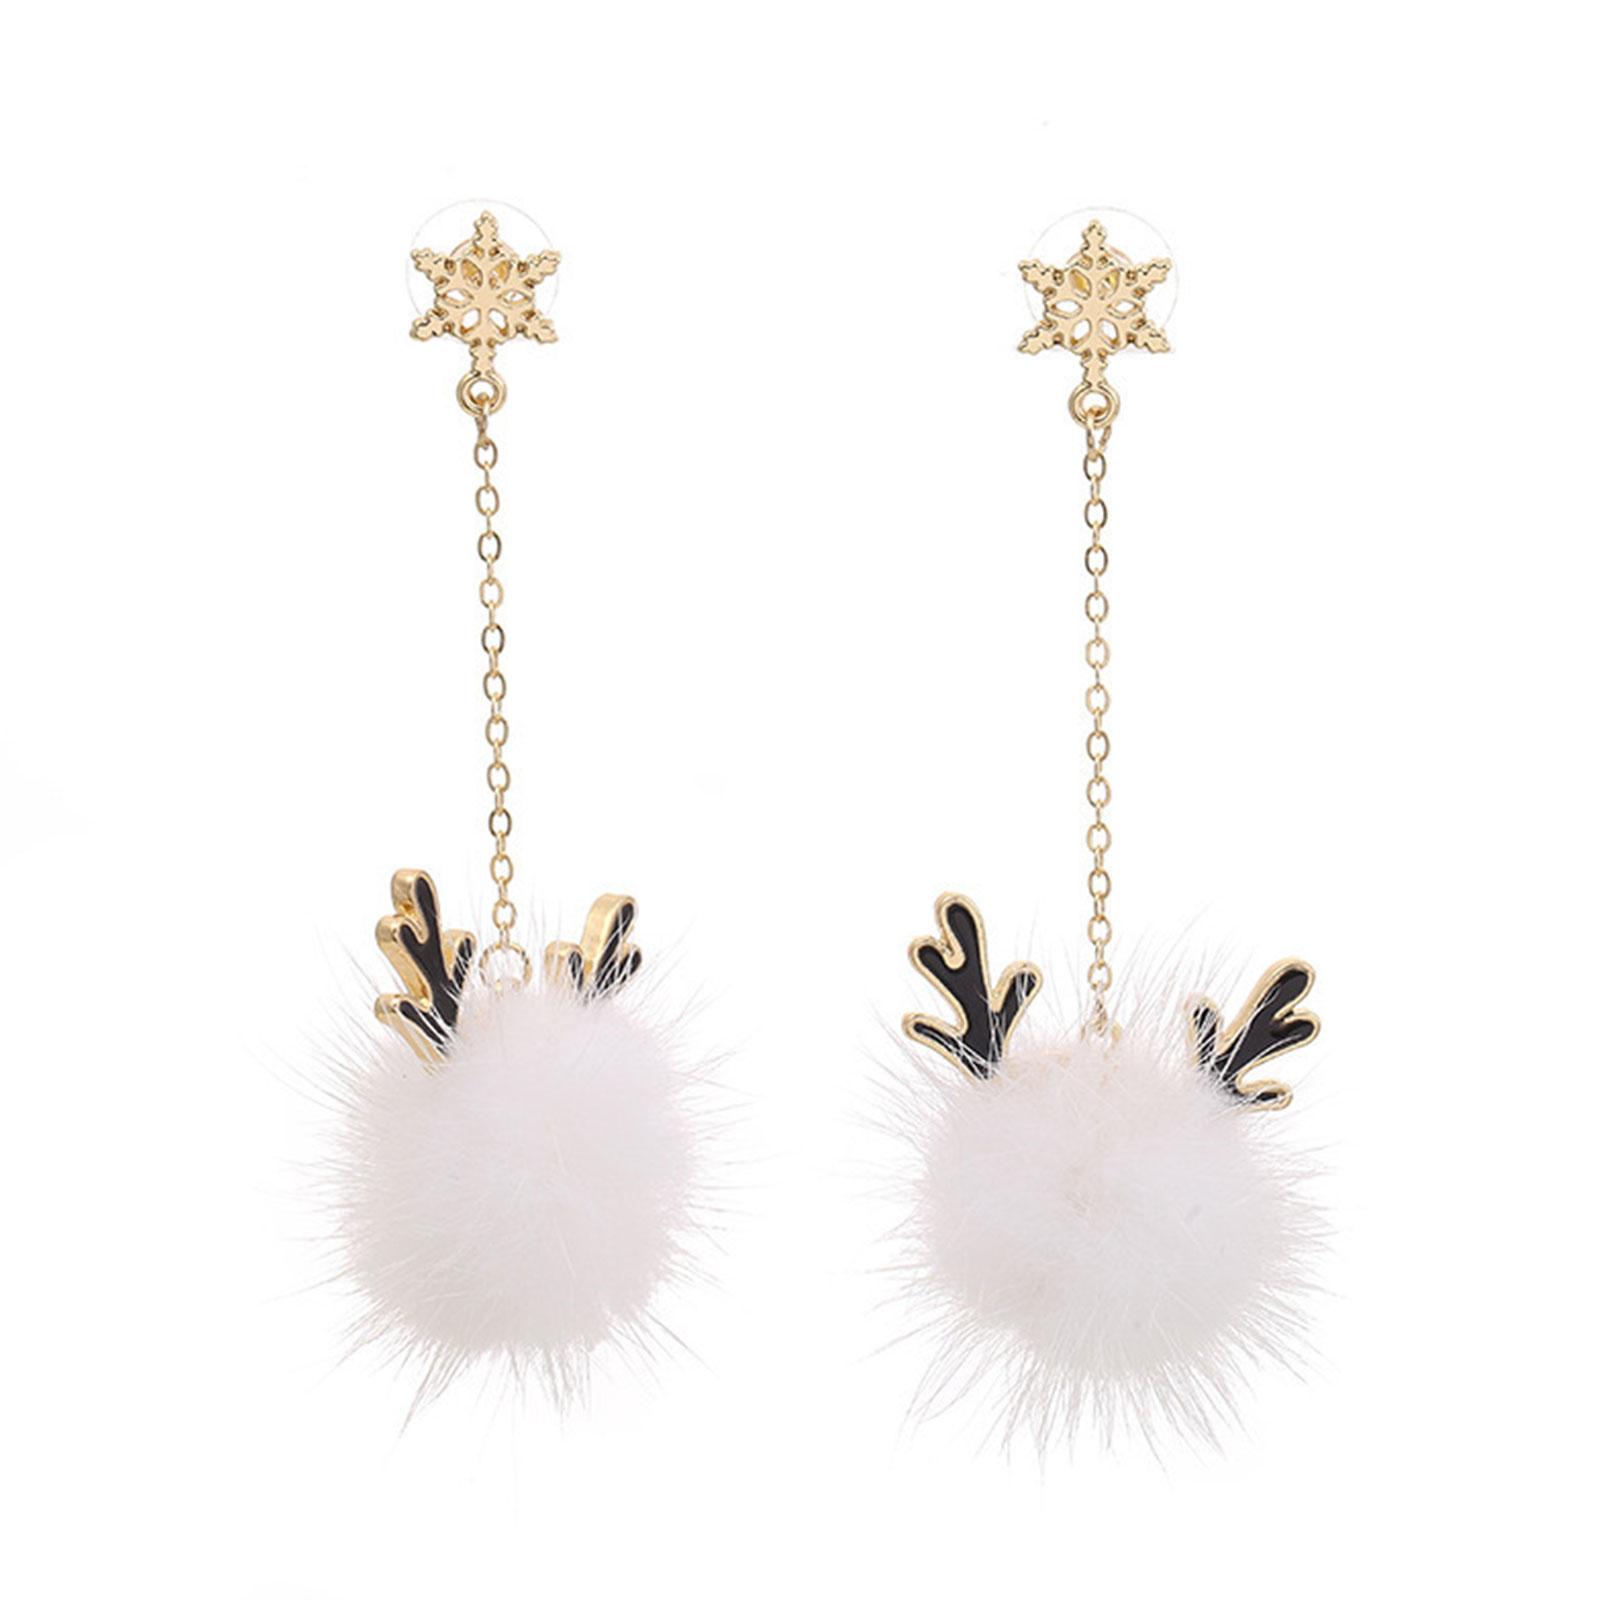 LIUZHIPENG Pom Pom Earrings for Women Girls Cute Snowflake Antler Pompom Dangle Earring Pierced Ear Stud Drops Christmas Xmas Holiday Jewelry G2Q9 - image 5 of 9